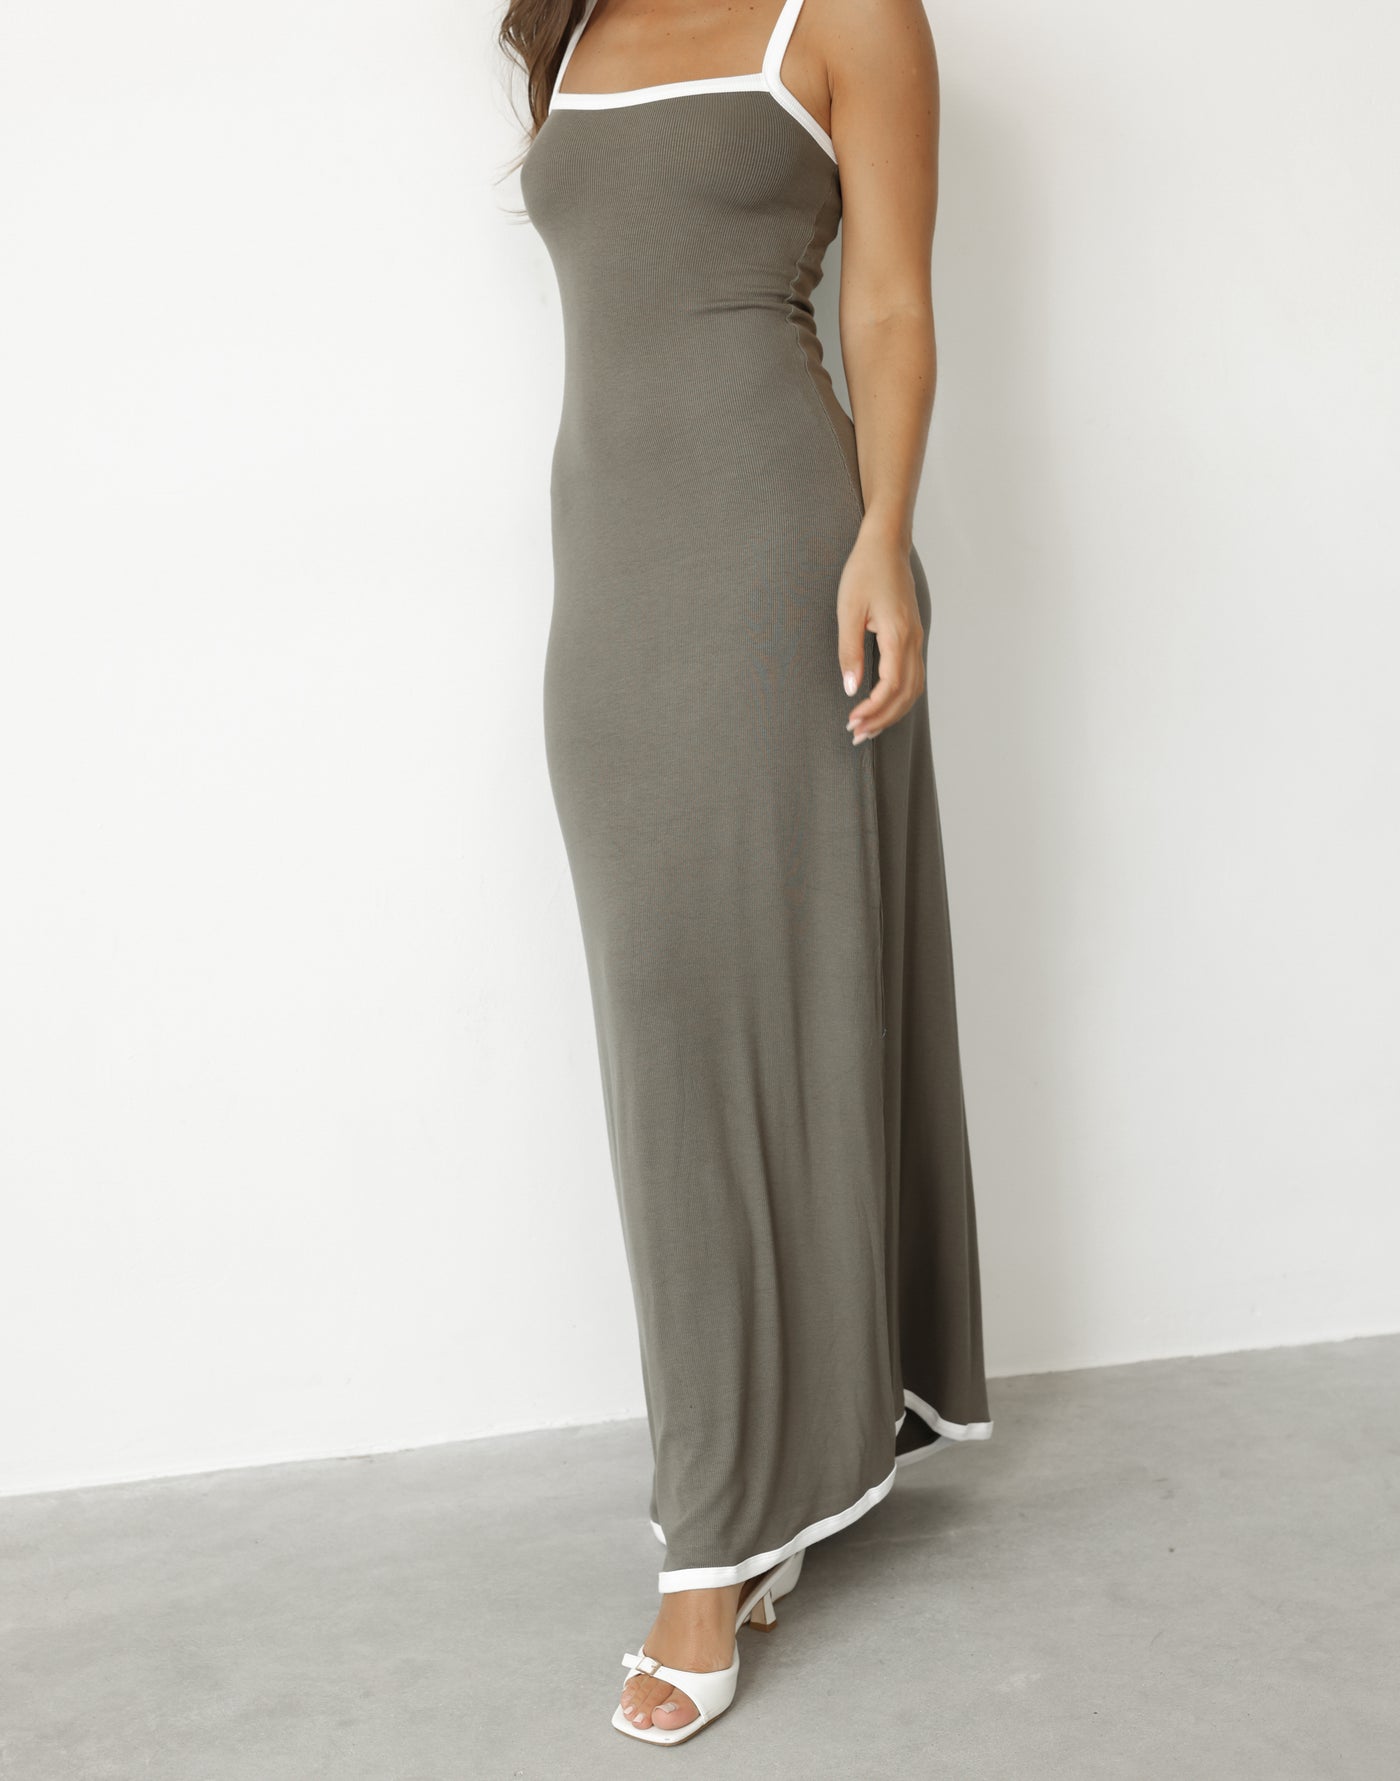 Amihan Maxi Dress (Khaki) - Stretch Knit Scoop Neck Contrast Detail Maxi Dress - Women's Dress - Charcoal Clothing